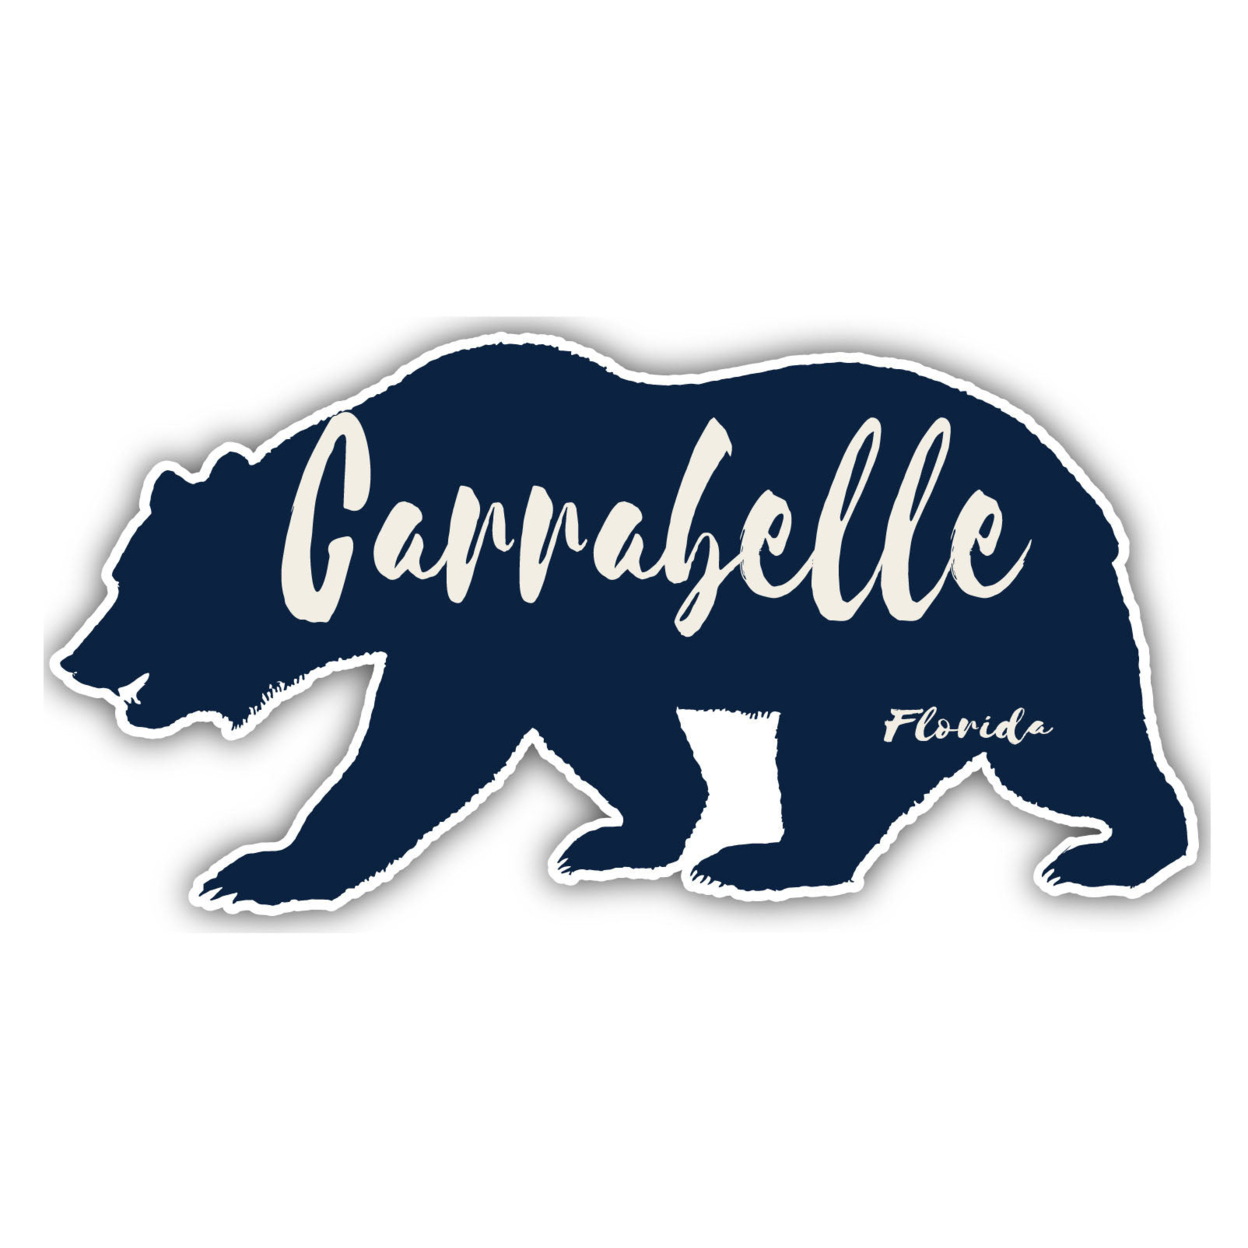 Carrabelle Florida Souvenir Decorative Stickers (Choose Theme And Size) - 4-Pack, 8-Inch, Bear